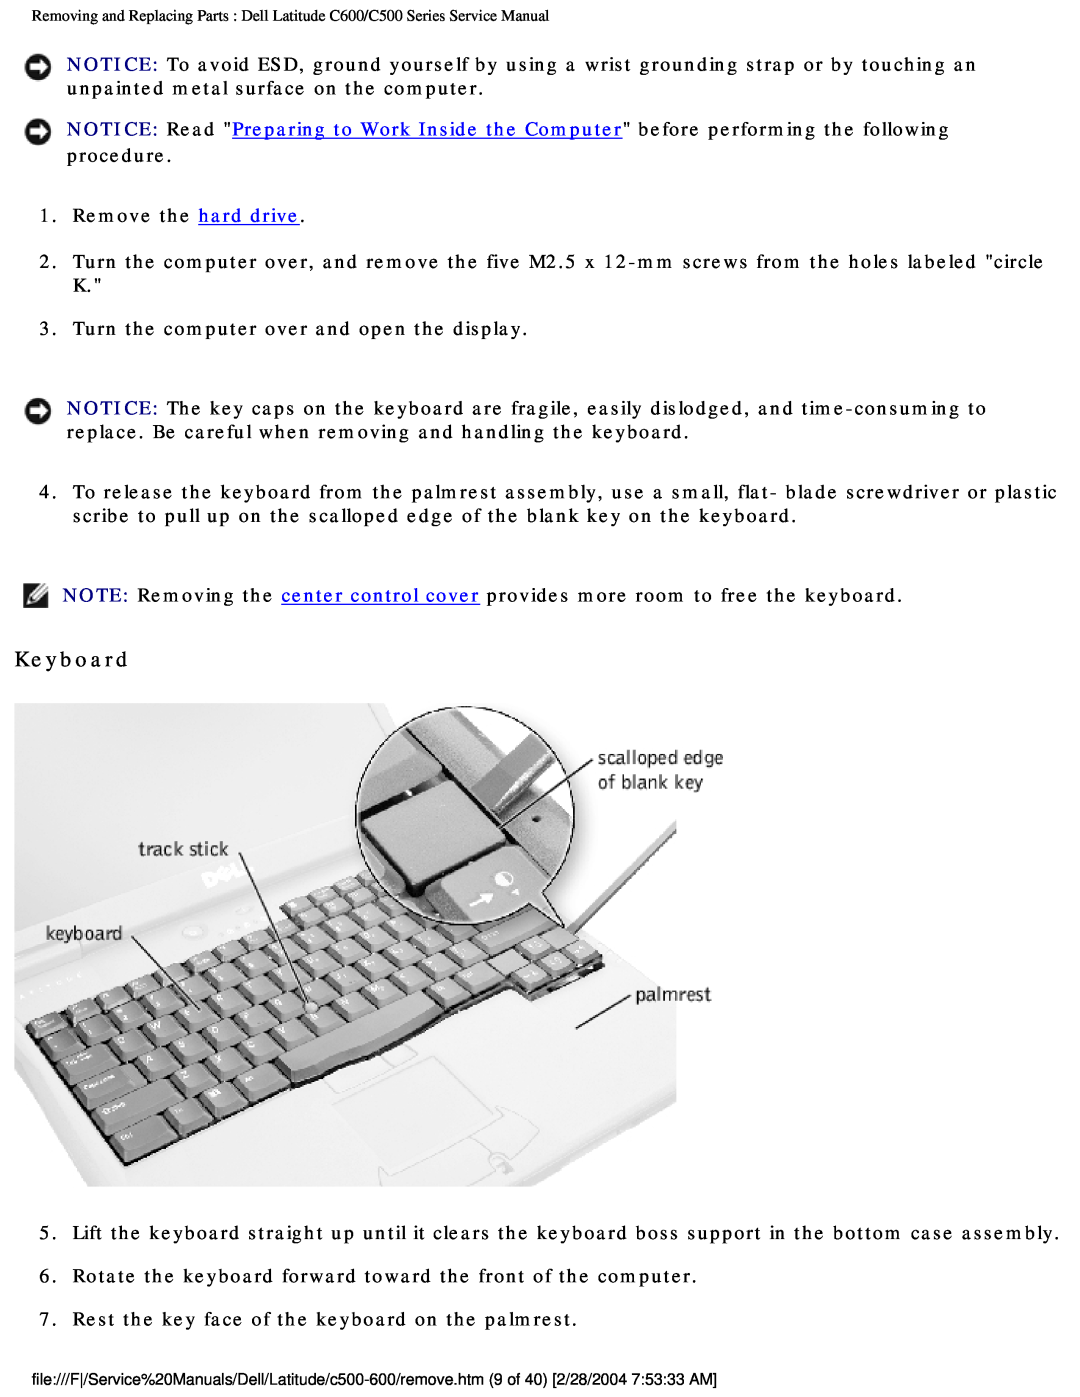 Dell C500 manual Keyboard 